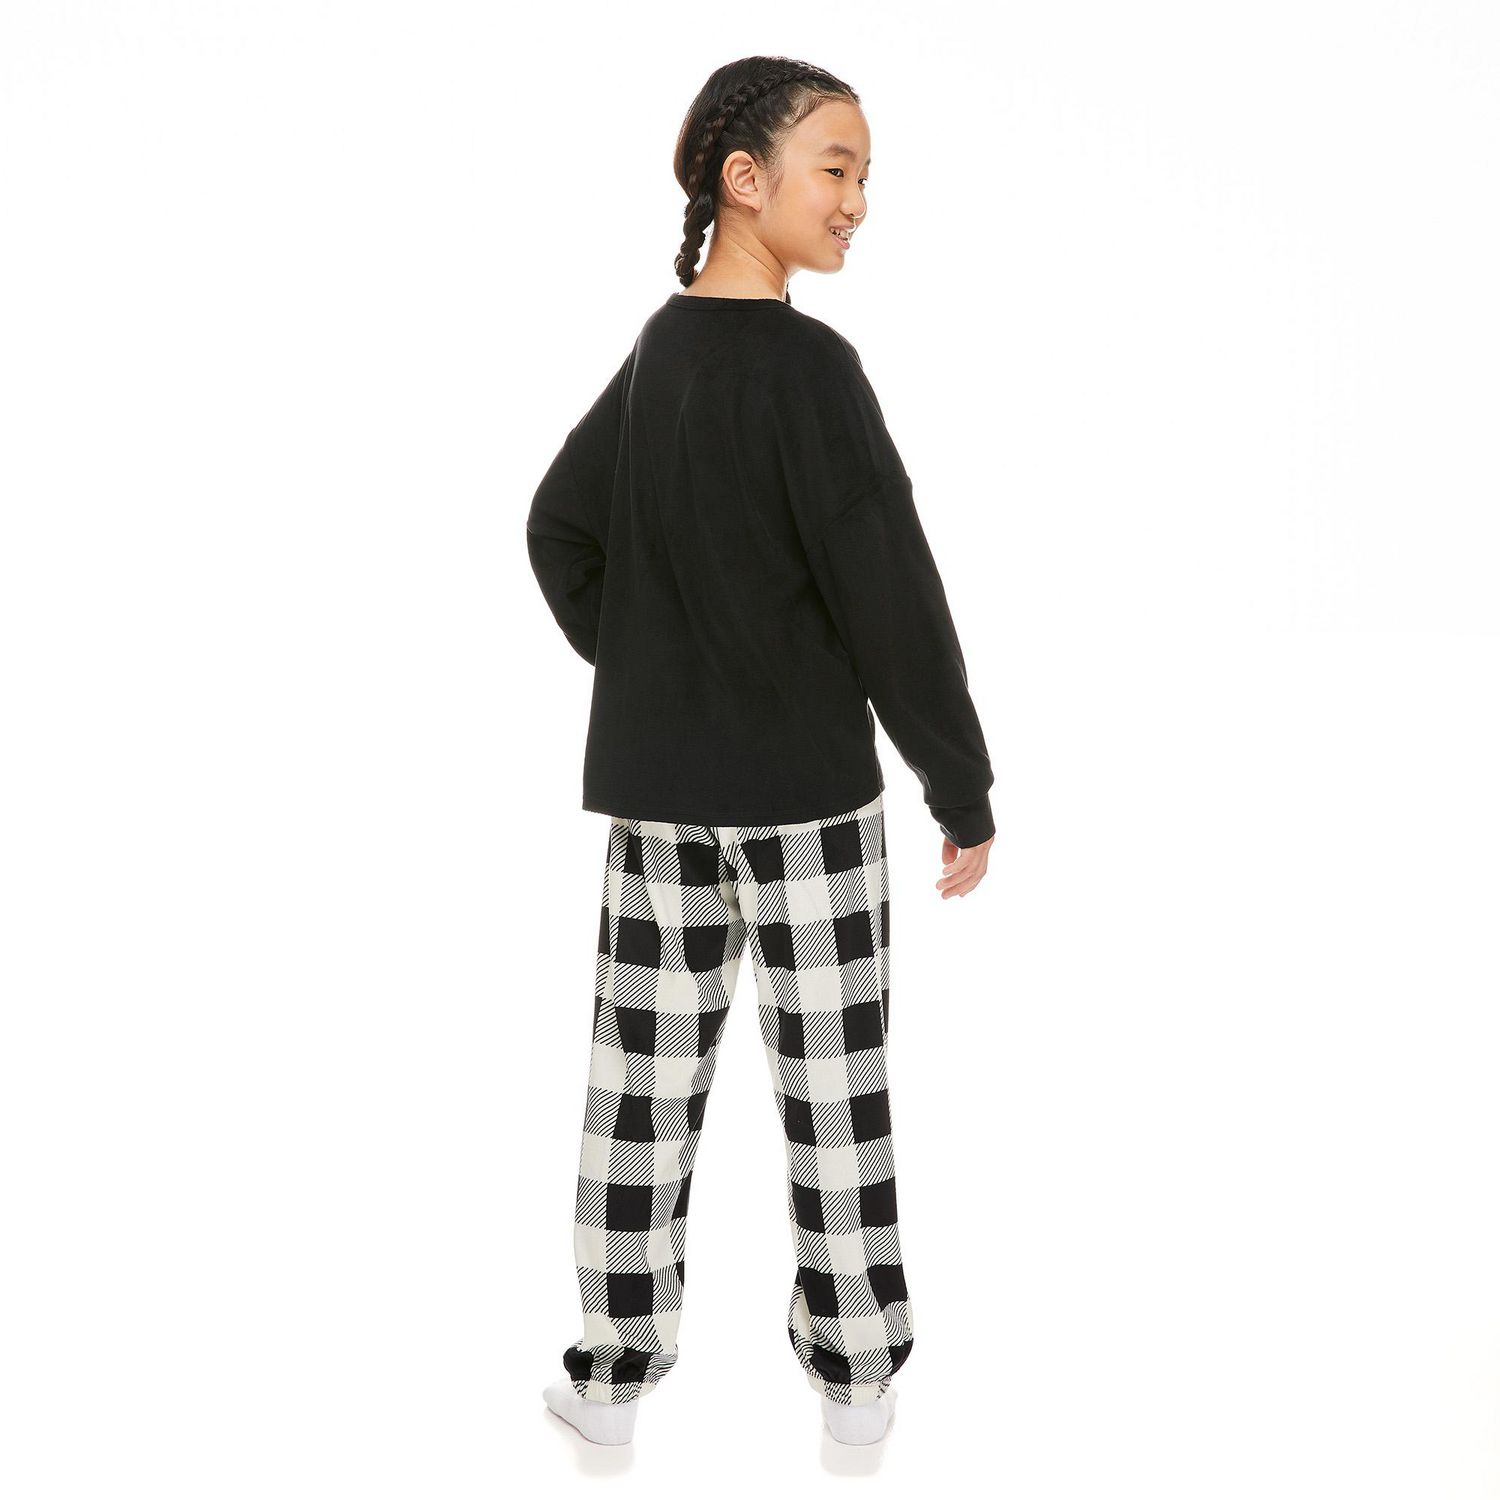 Super Cute Girls Justice Brand 2 Piece Cupcake Pajama Set PJ set Sleepwear  New